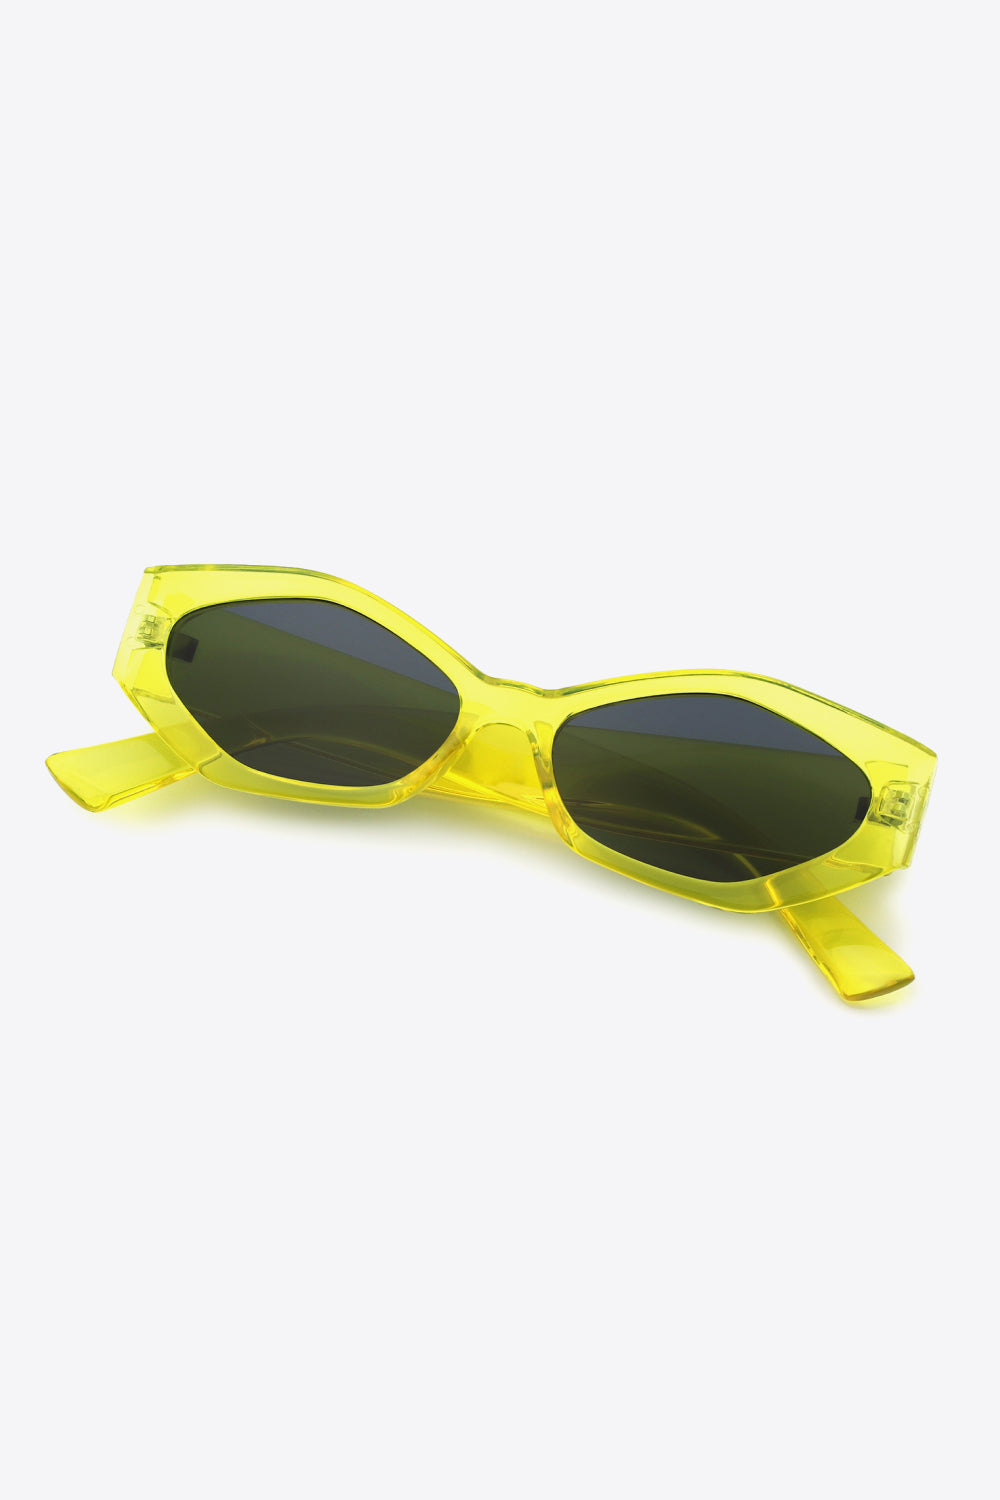 Wayfare Polycarbonate Frame Sunglasses - nailedmoms